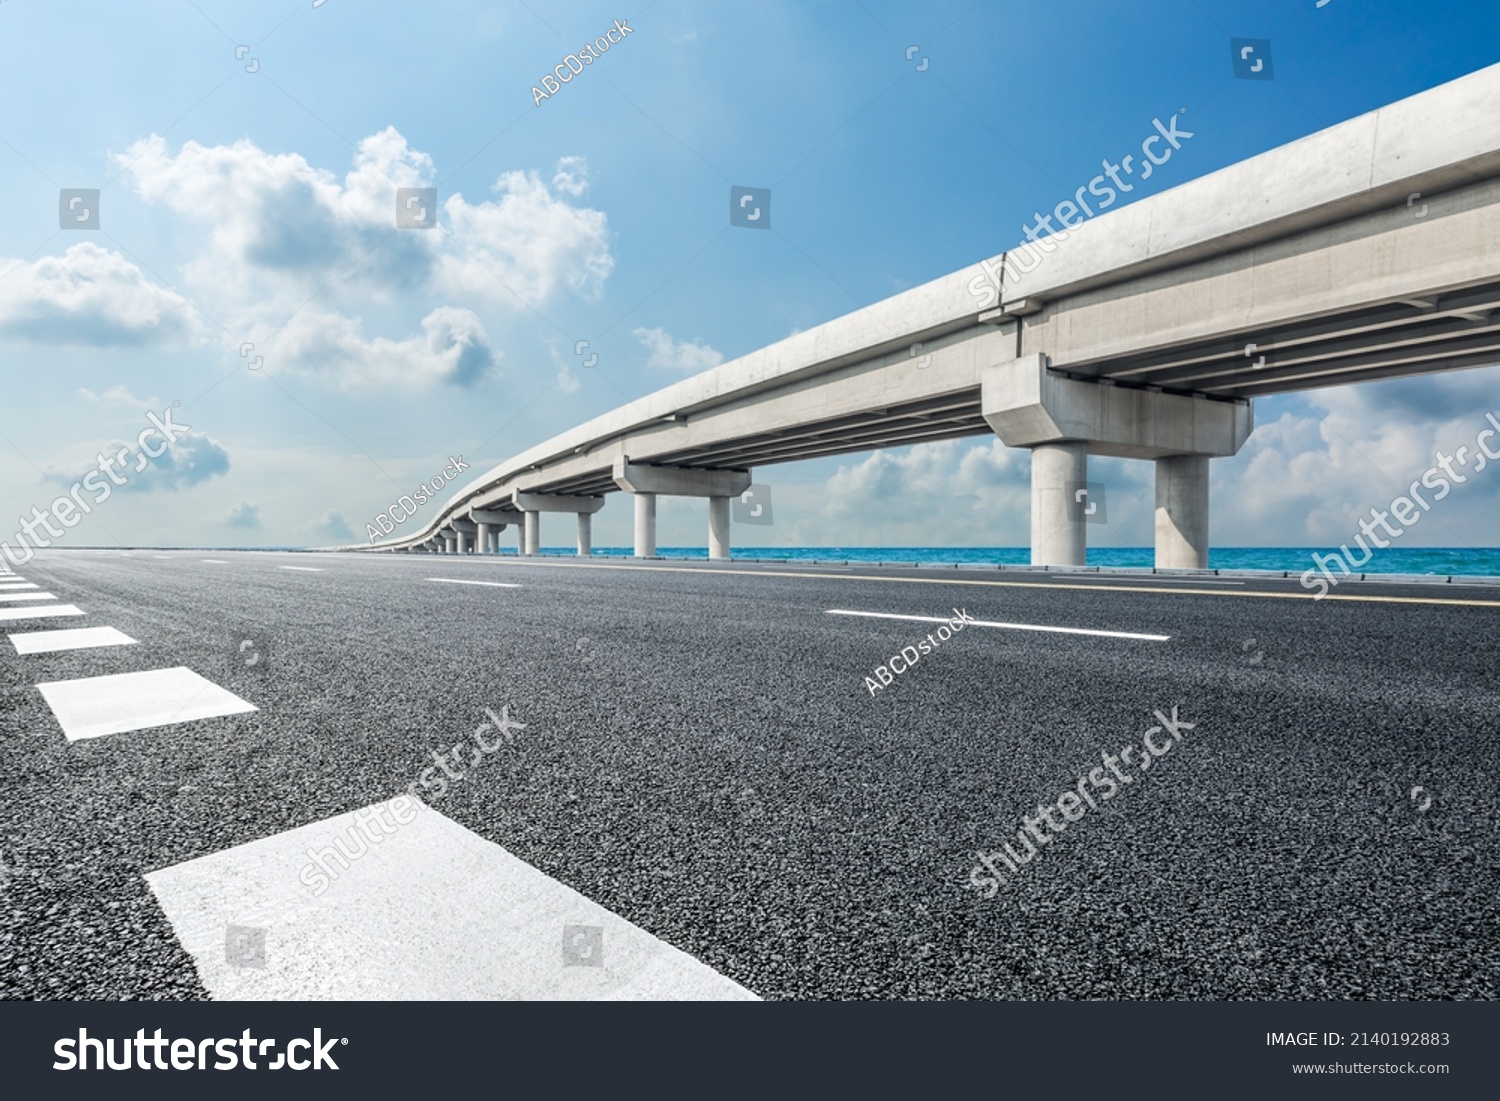 Empty asphalt road and river with bridge under blue sky #2140192883